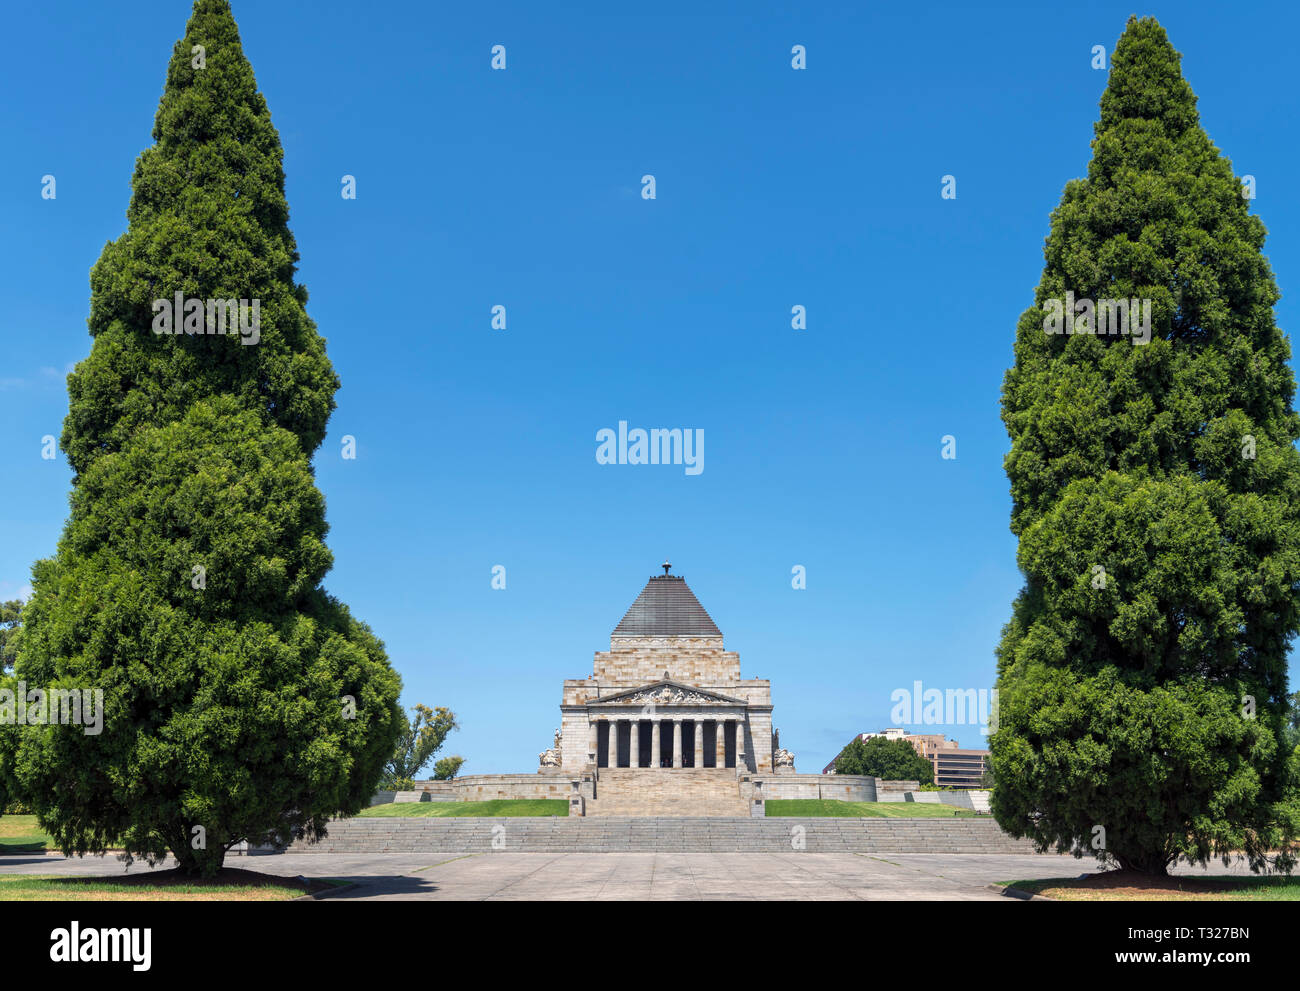 The Shrine of Remembrance, a war memorial in Kings Domain, Melbourne, Victoria, Australia Stock Photo